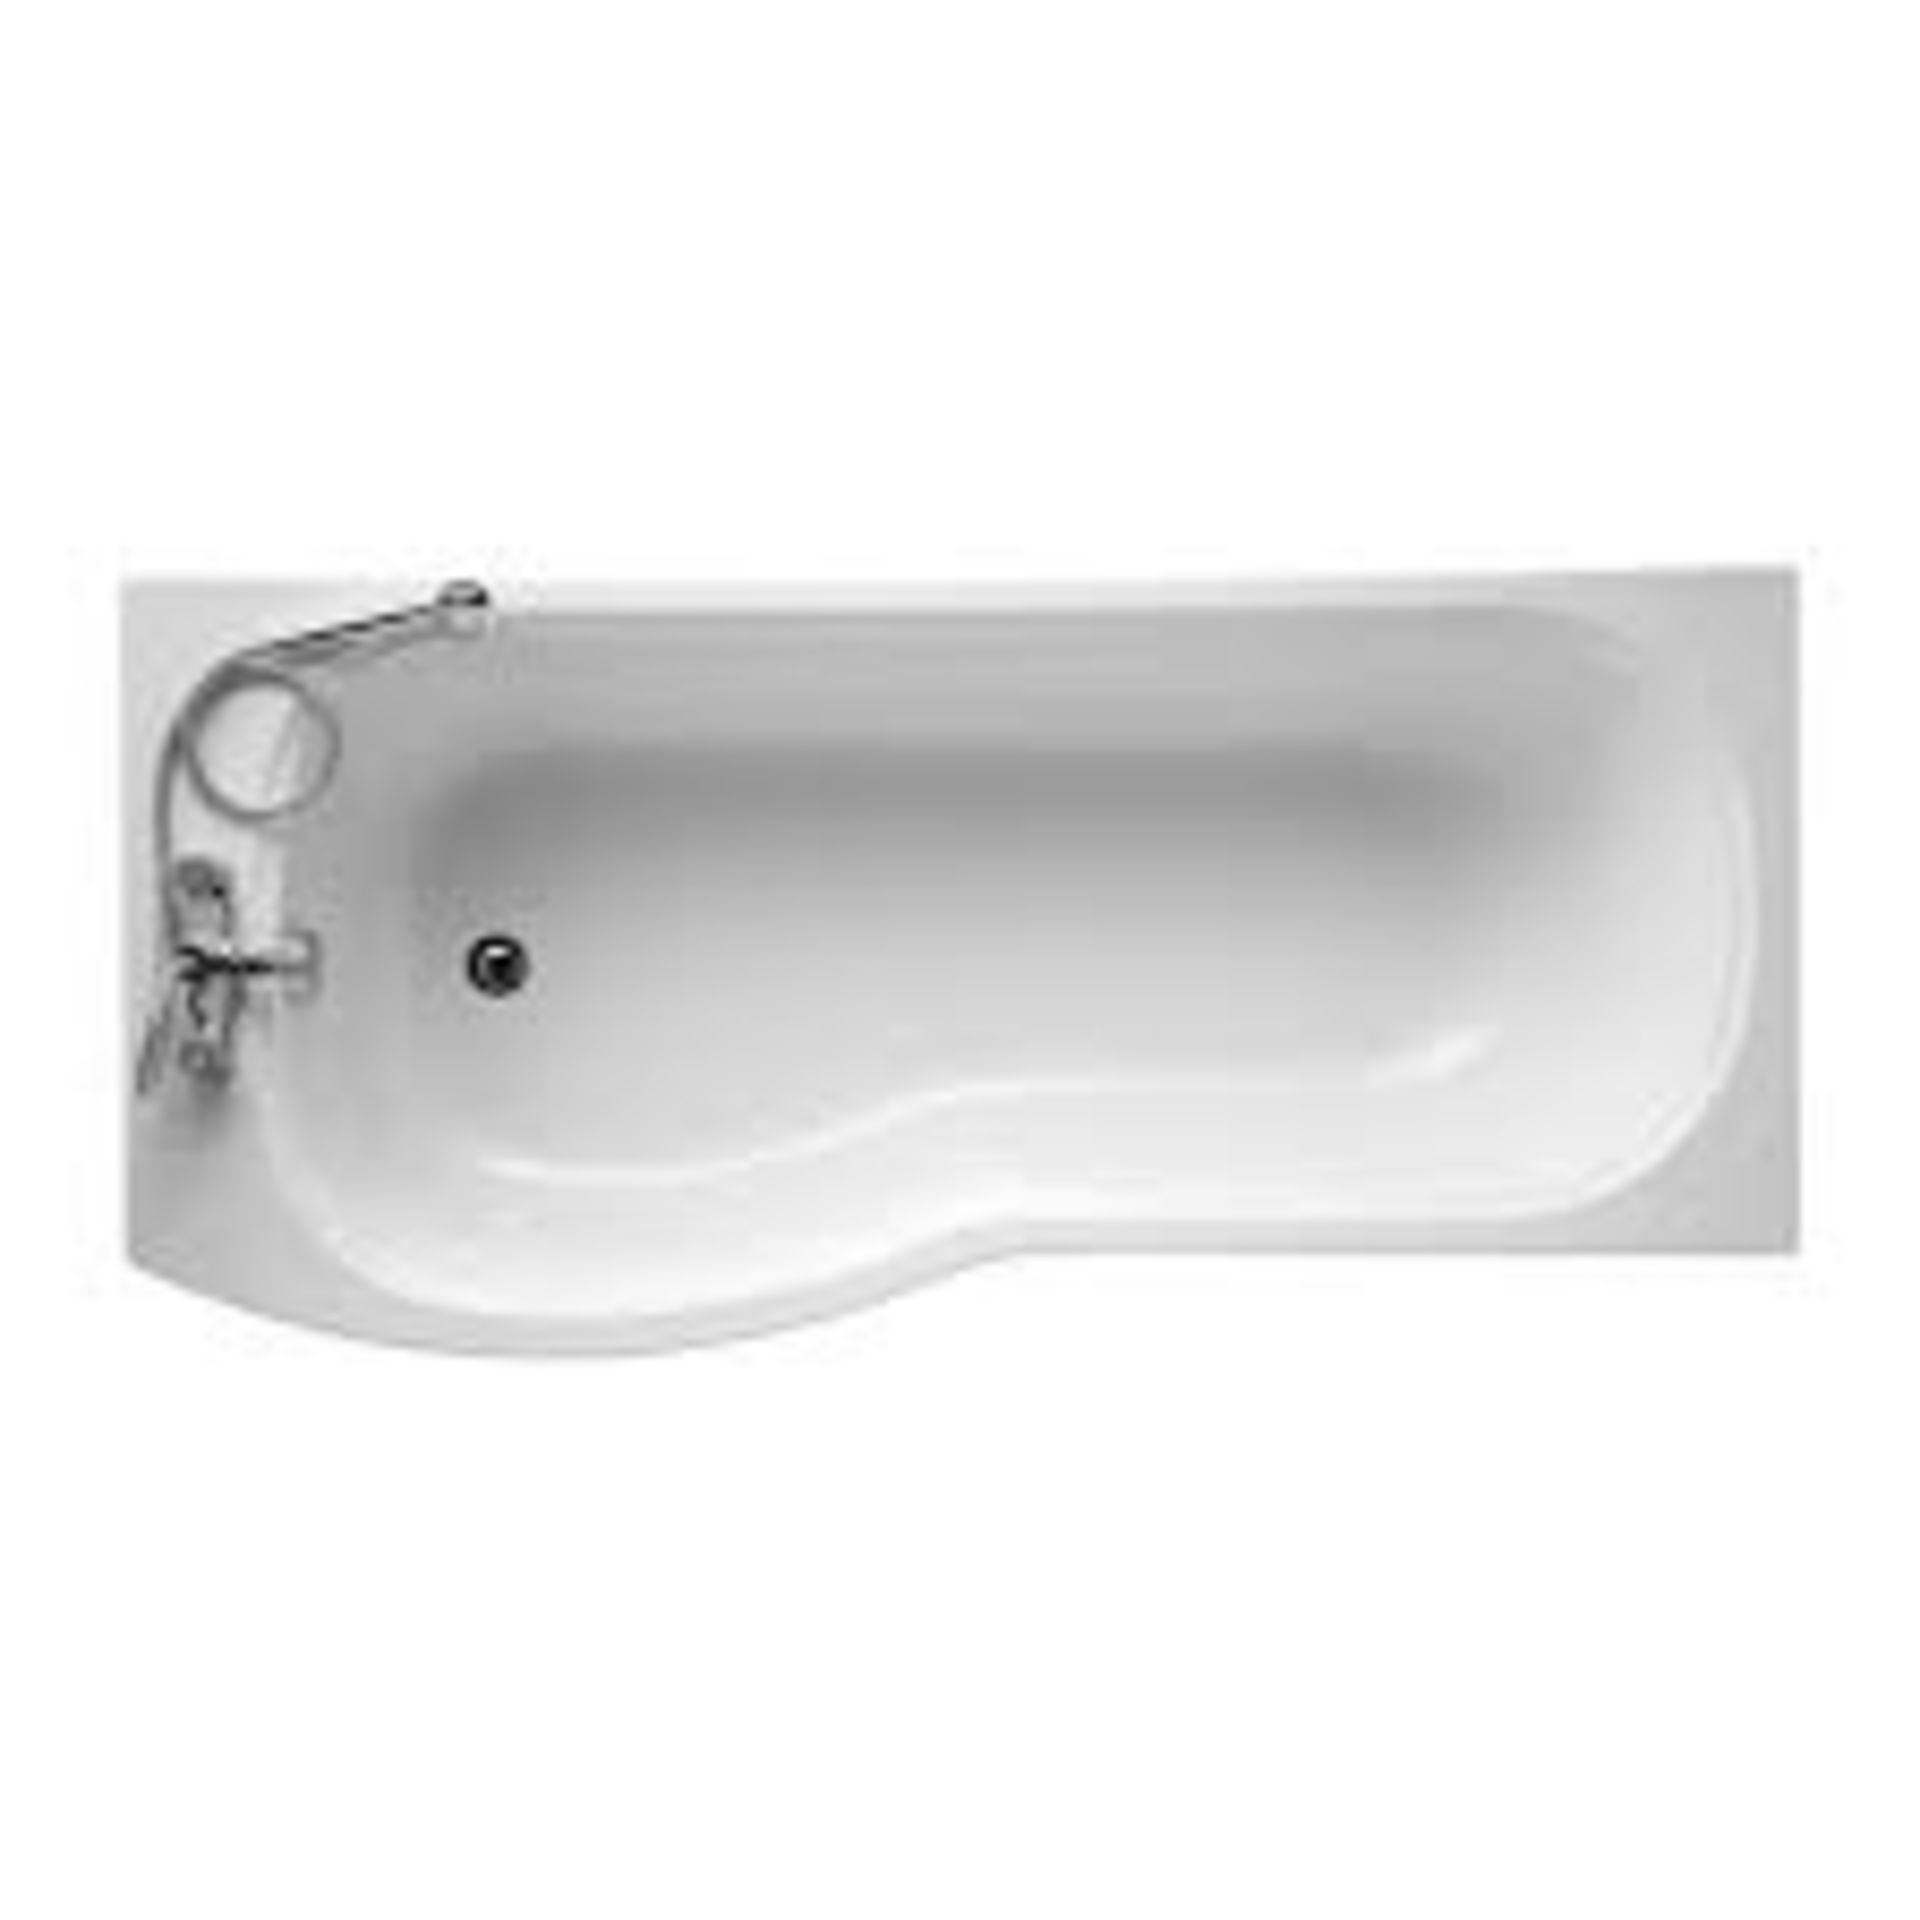 New Alto E7602 1700 X 800 Left Hand No Tap Holes Shower/Bath White. Rrp £247.99. 170 X 80 Idea... - Image 2 of 2